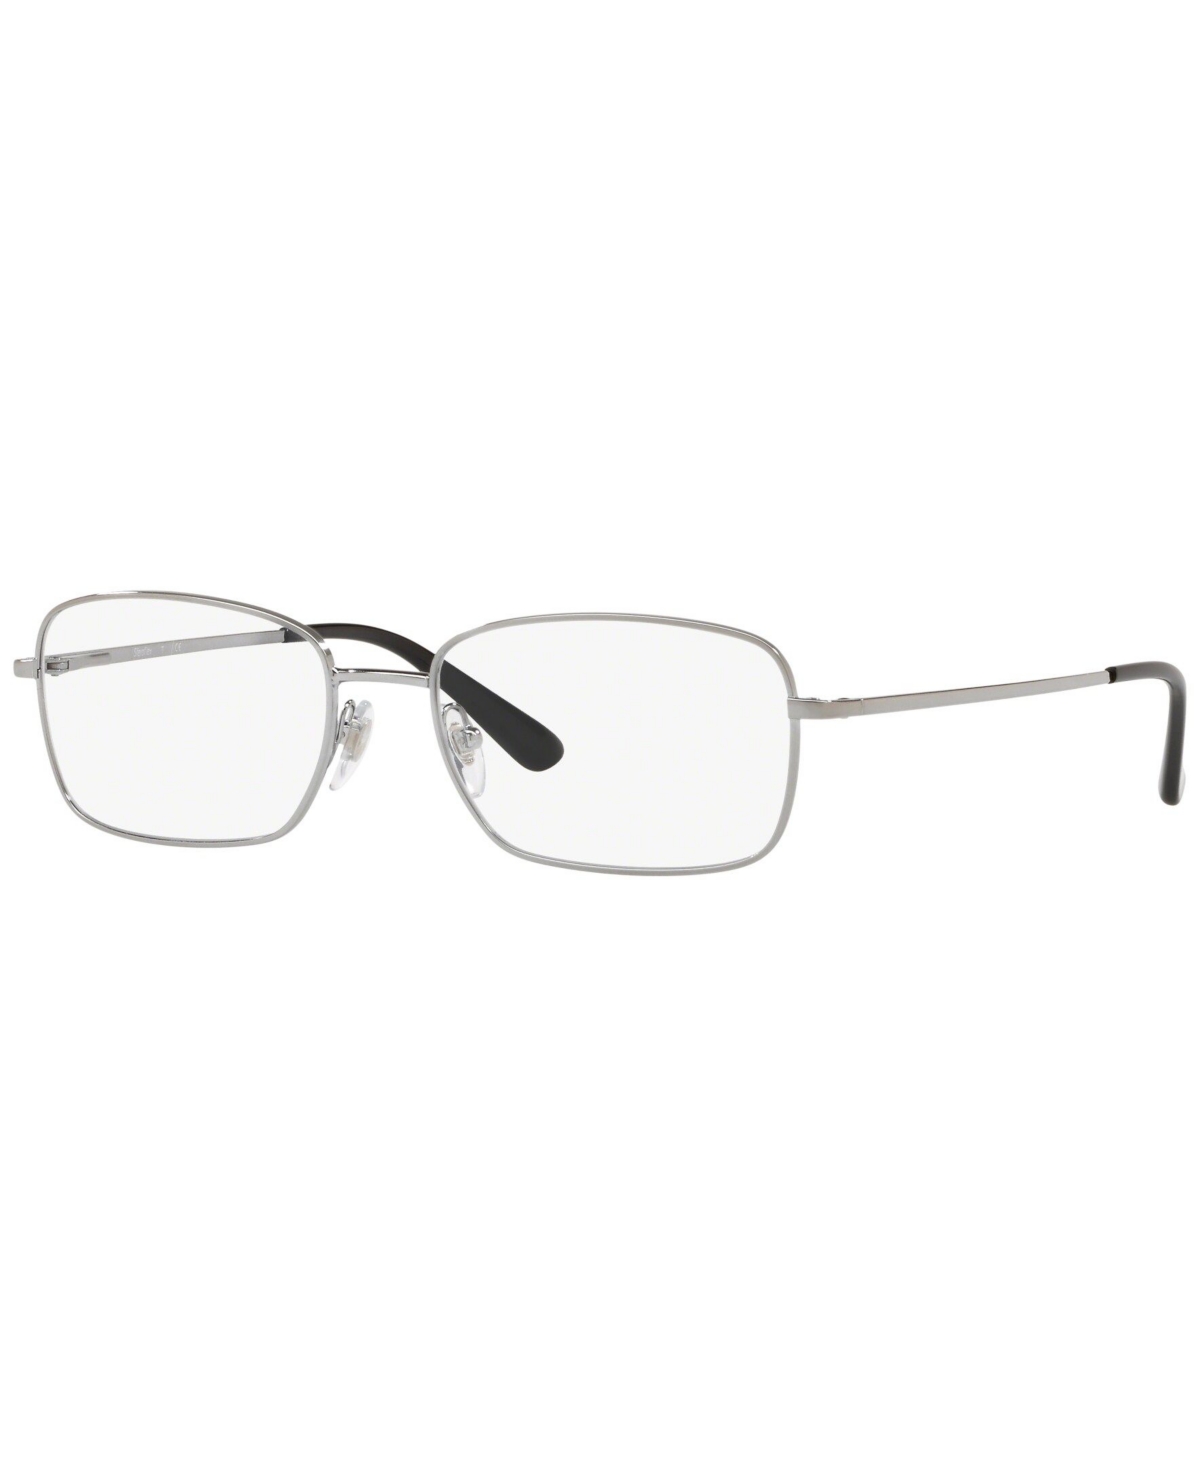 SF2291 Men's Rectangle Eyeglasses - Brown